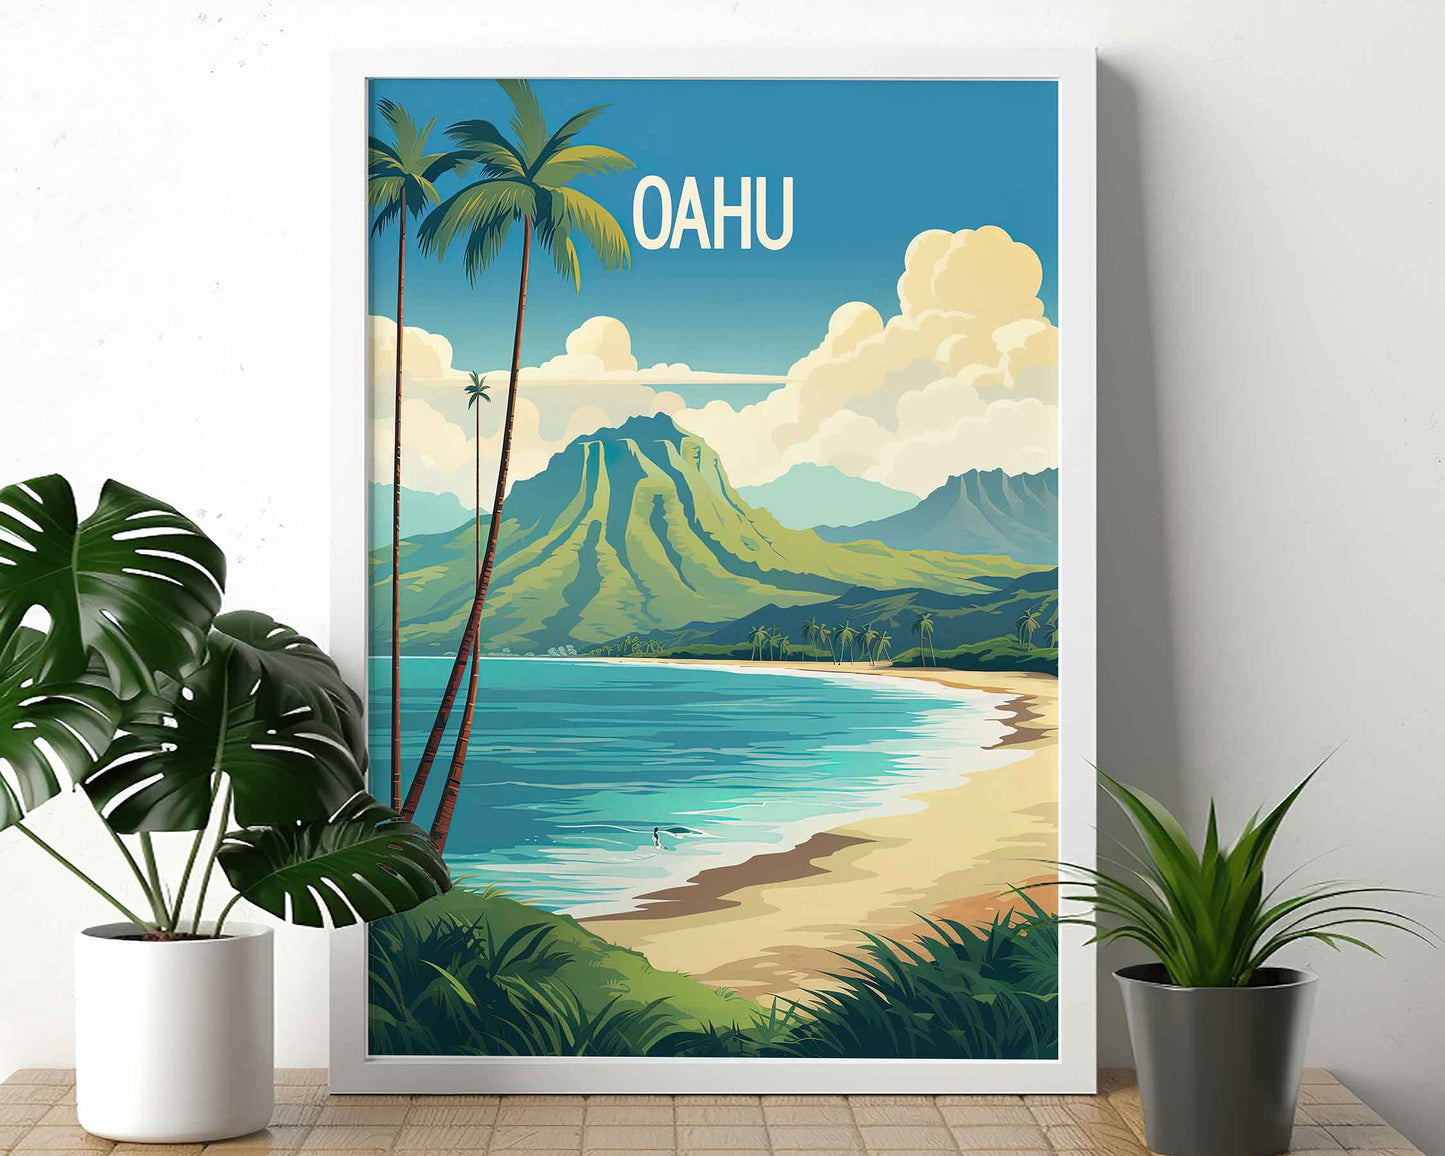 Framed Image of Oahu Hawaii Travel Wall Art Poster Prints Illustration